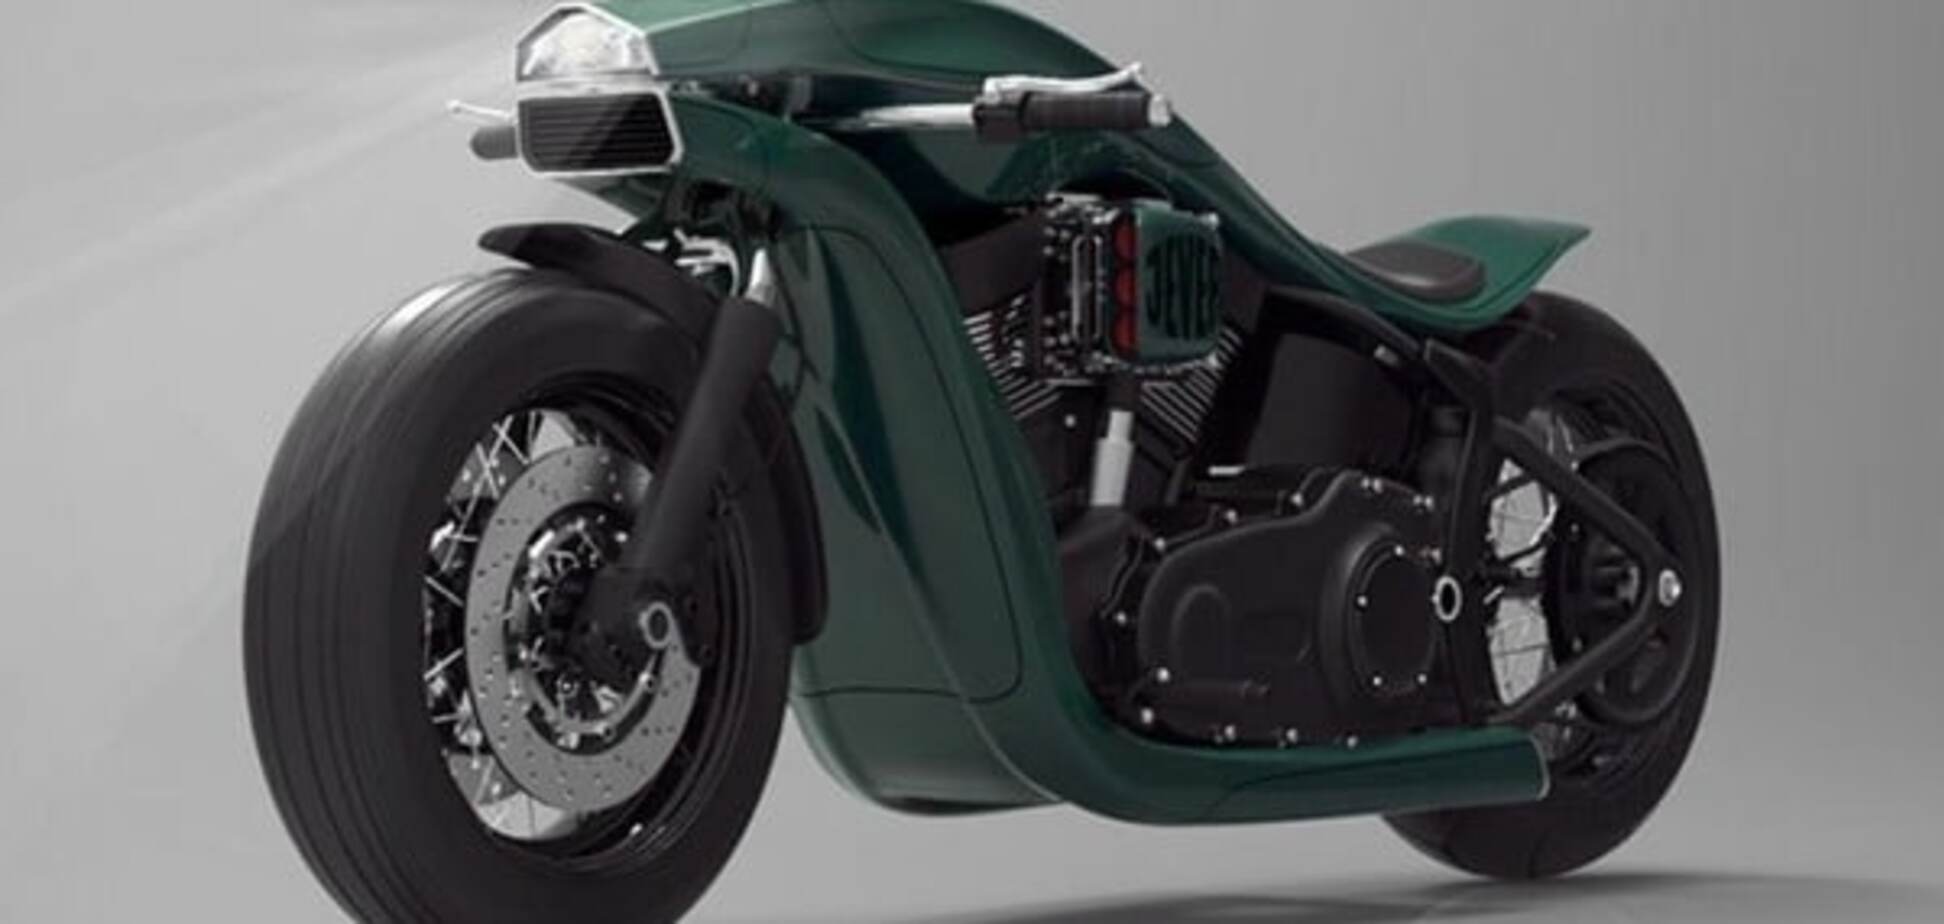 Harley-Davidson будущего: футуристичный внешний вид мотоцикла с духом 'винтажности'. Фото